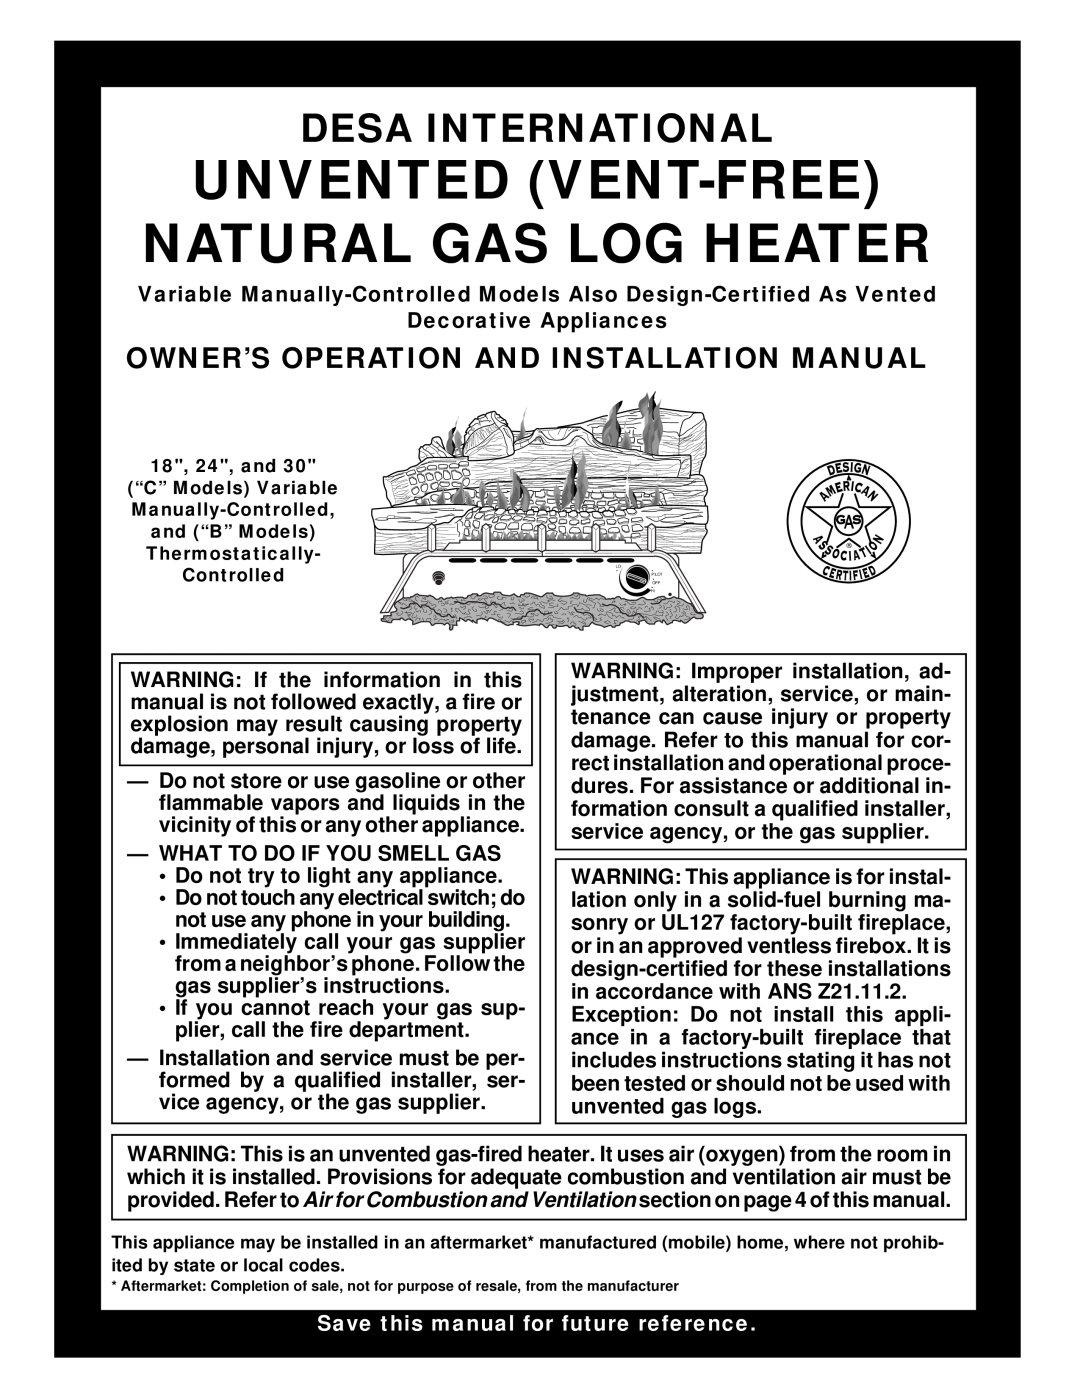 Desa CFS24NVC VS30N, B, C installation manual Decorative Appliances, What To Do If You Smell Gas, Desa International 